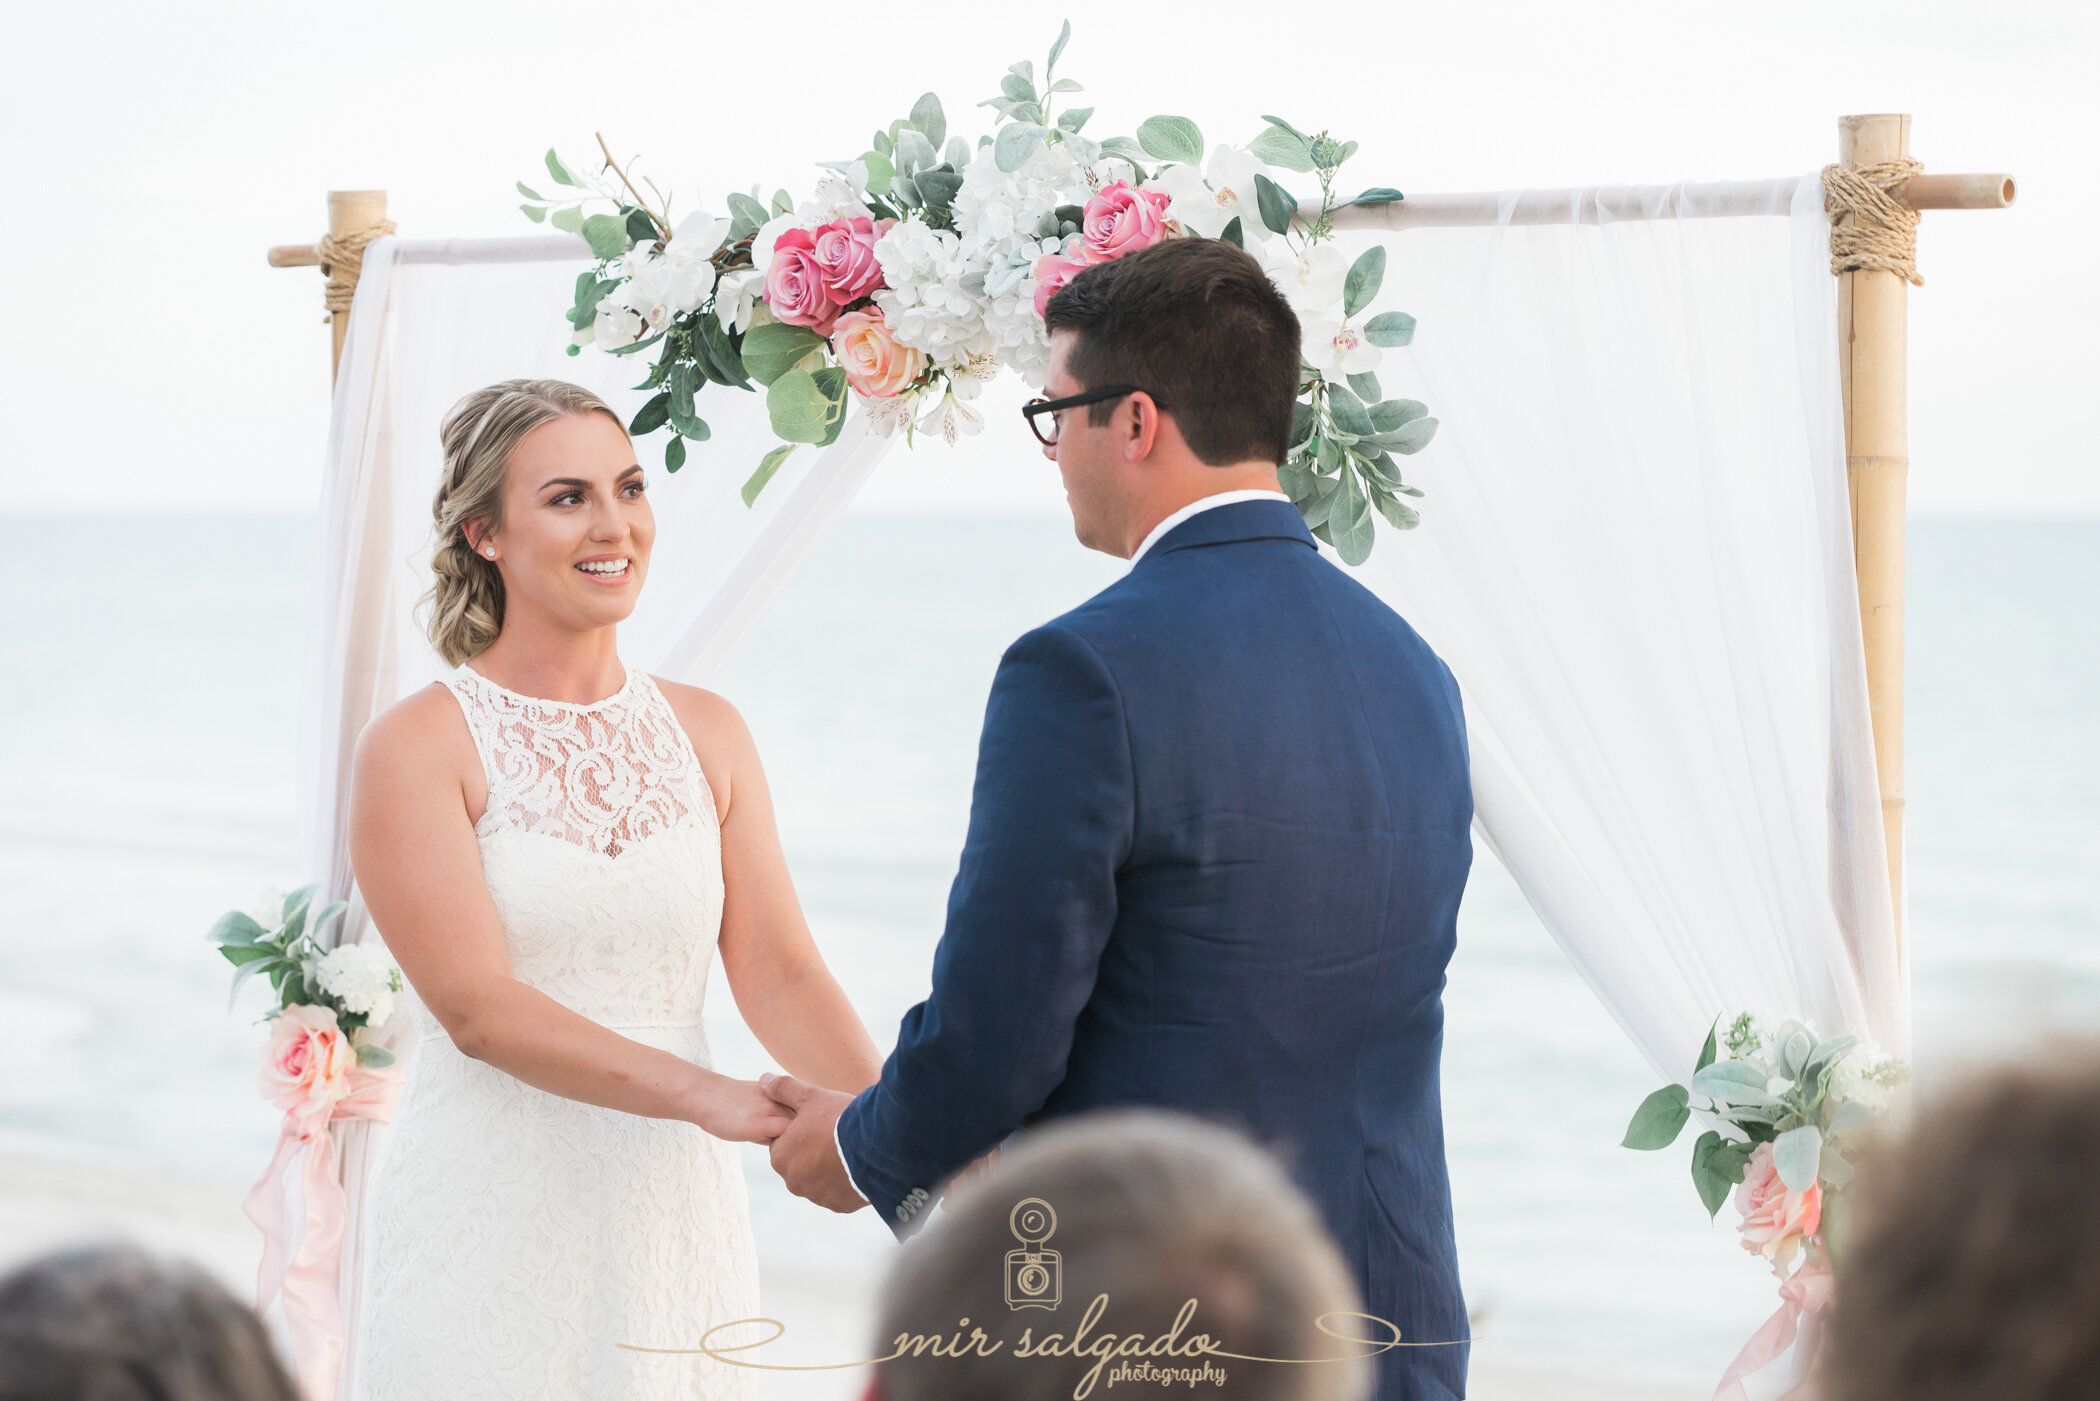 wedding-ceremony-holding-hands, beach-wedding-ceremony, beach-venue, bride-dress, groom-suit